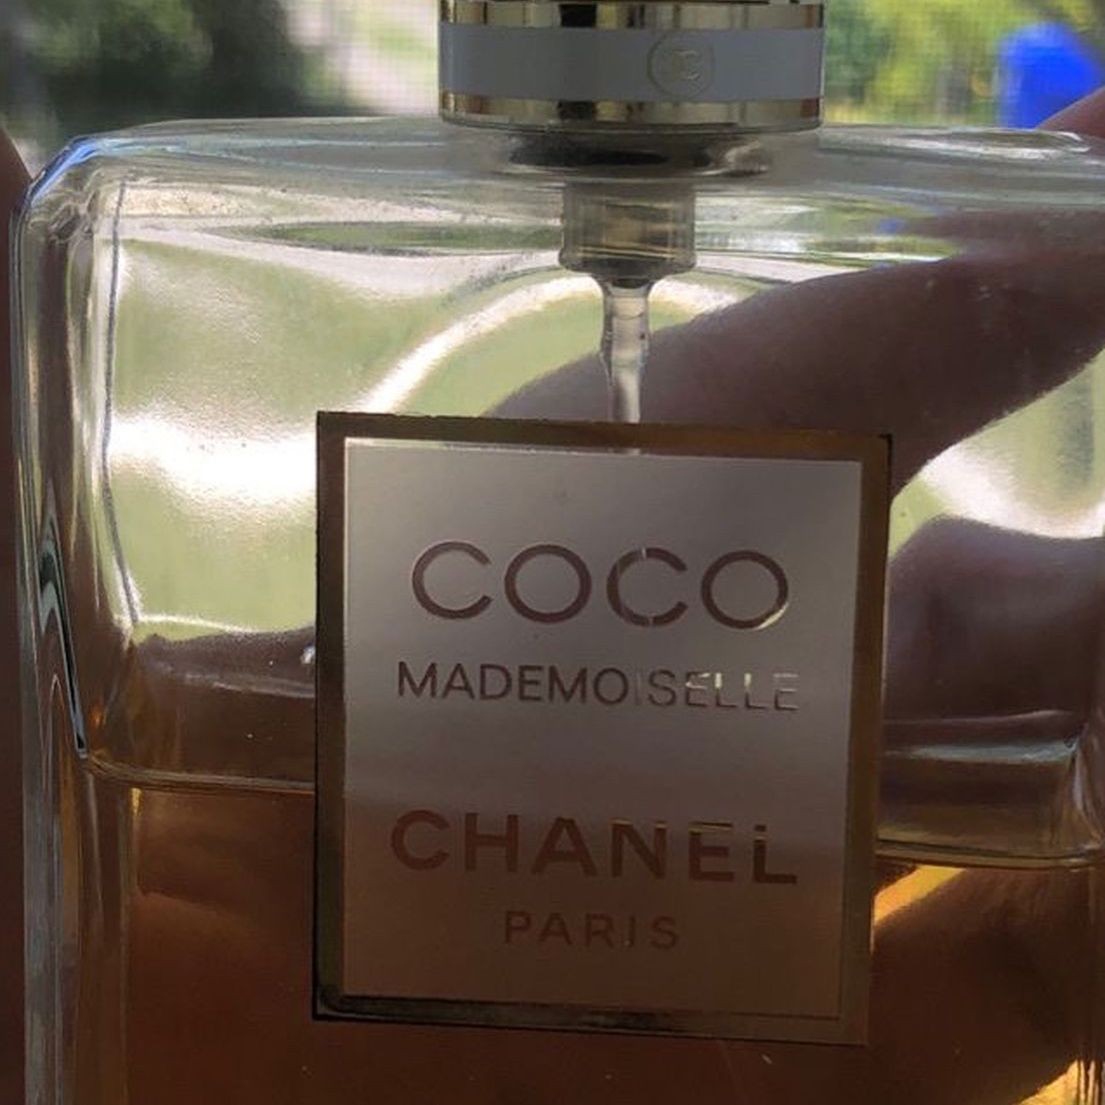 Chanel. Coco Mademoiselle. 55ml. Perfume